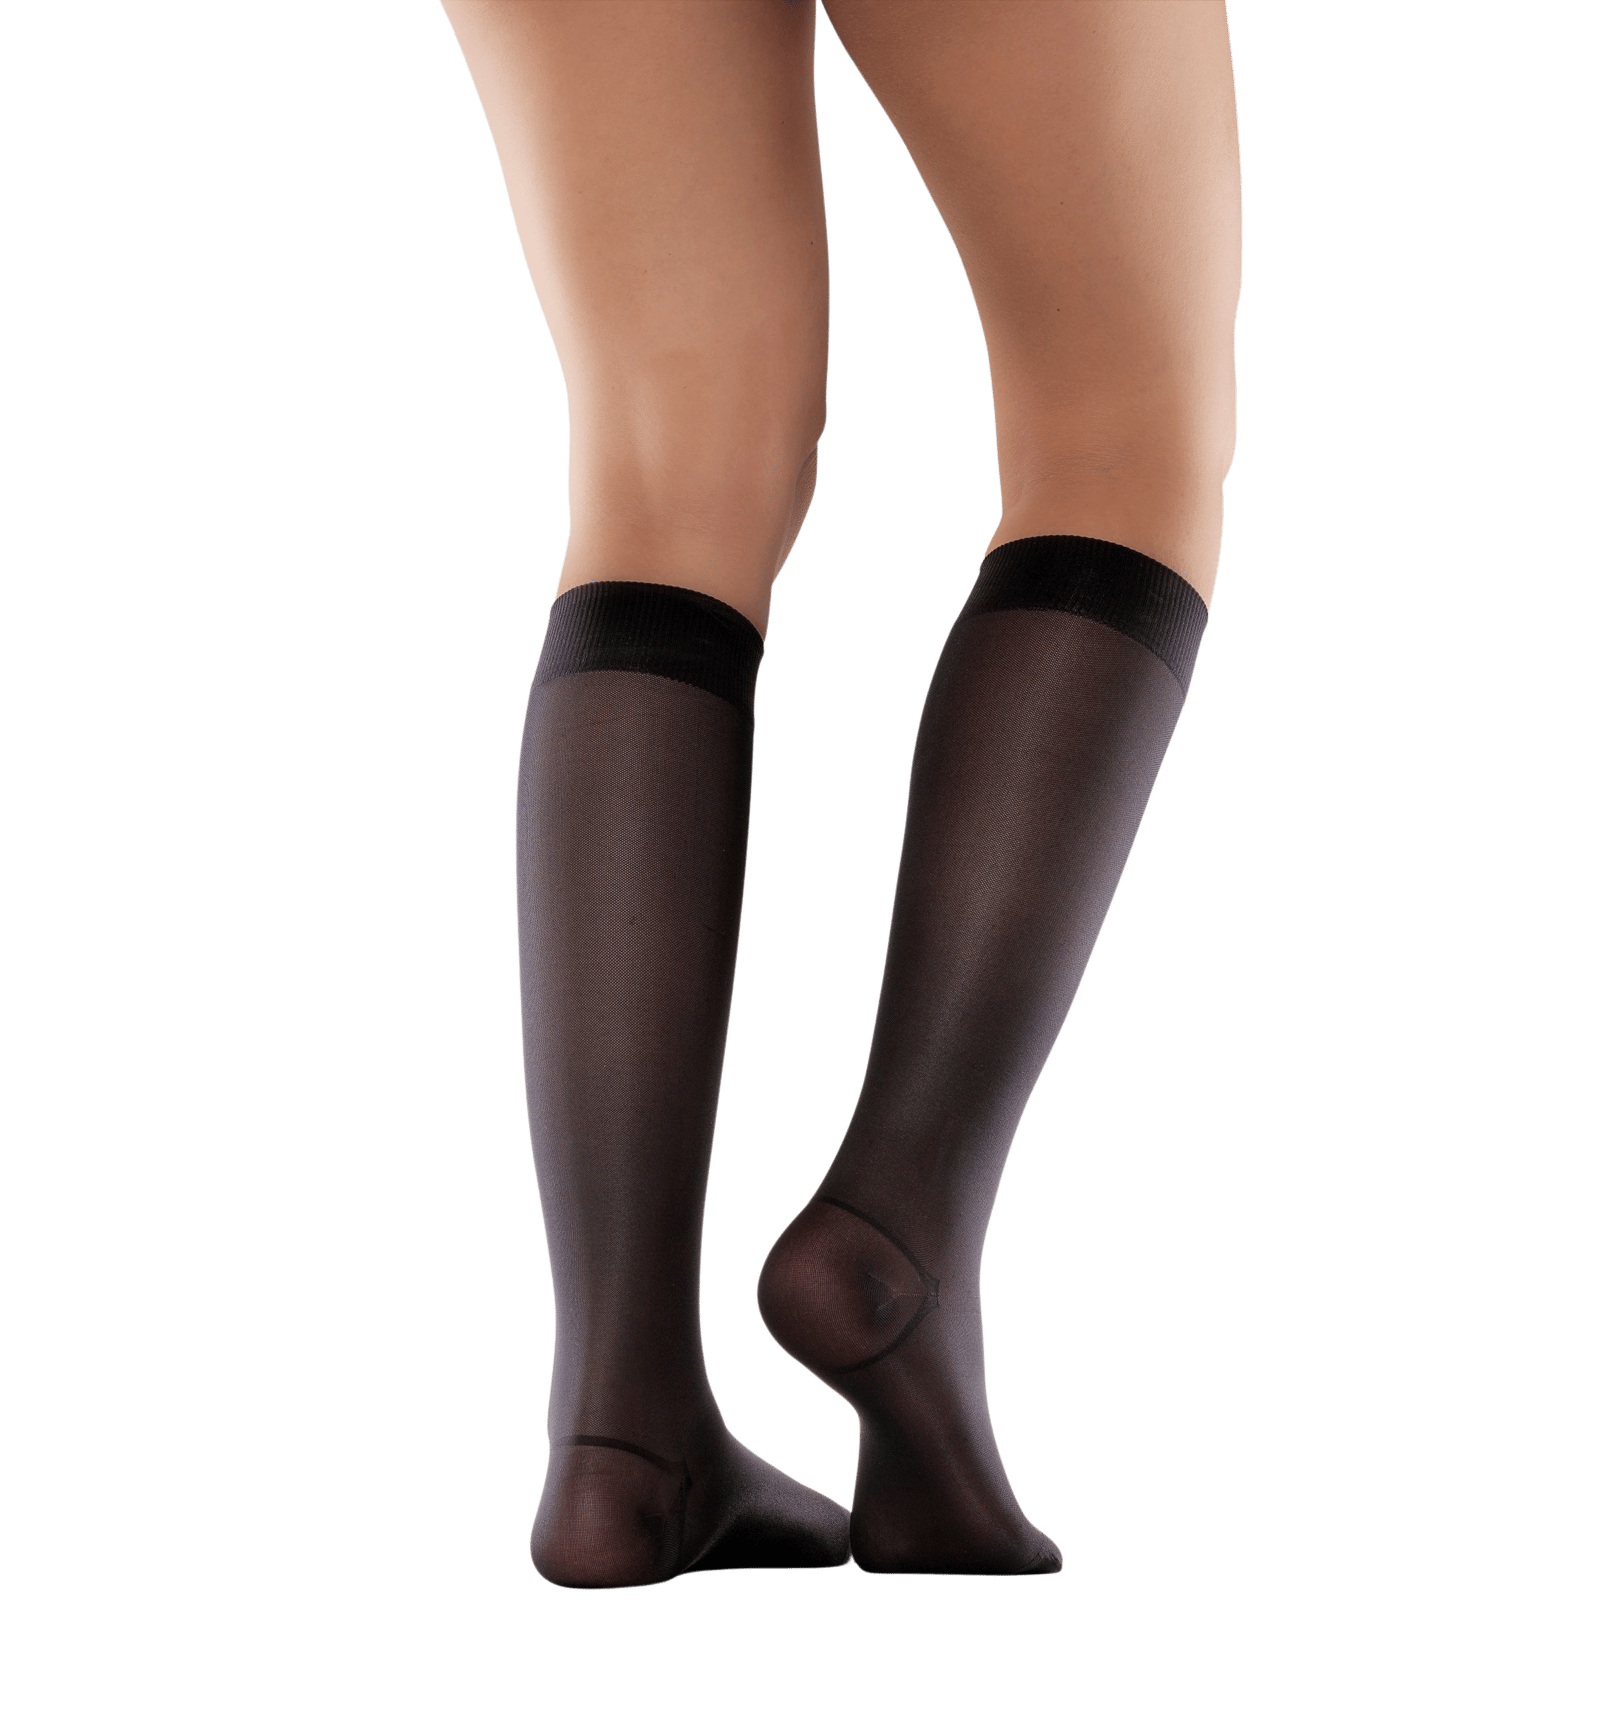 Mabs Nylon Knee Wide Stödstrumpor Black XL